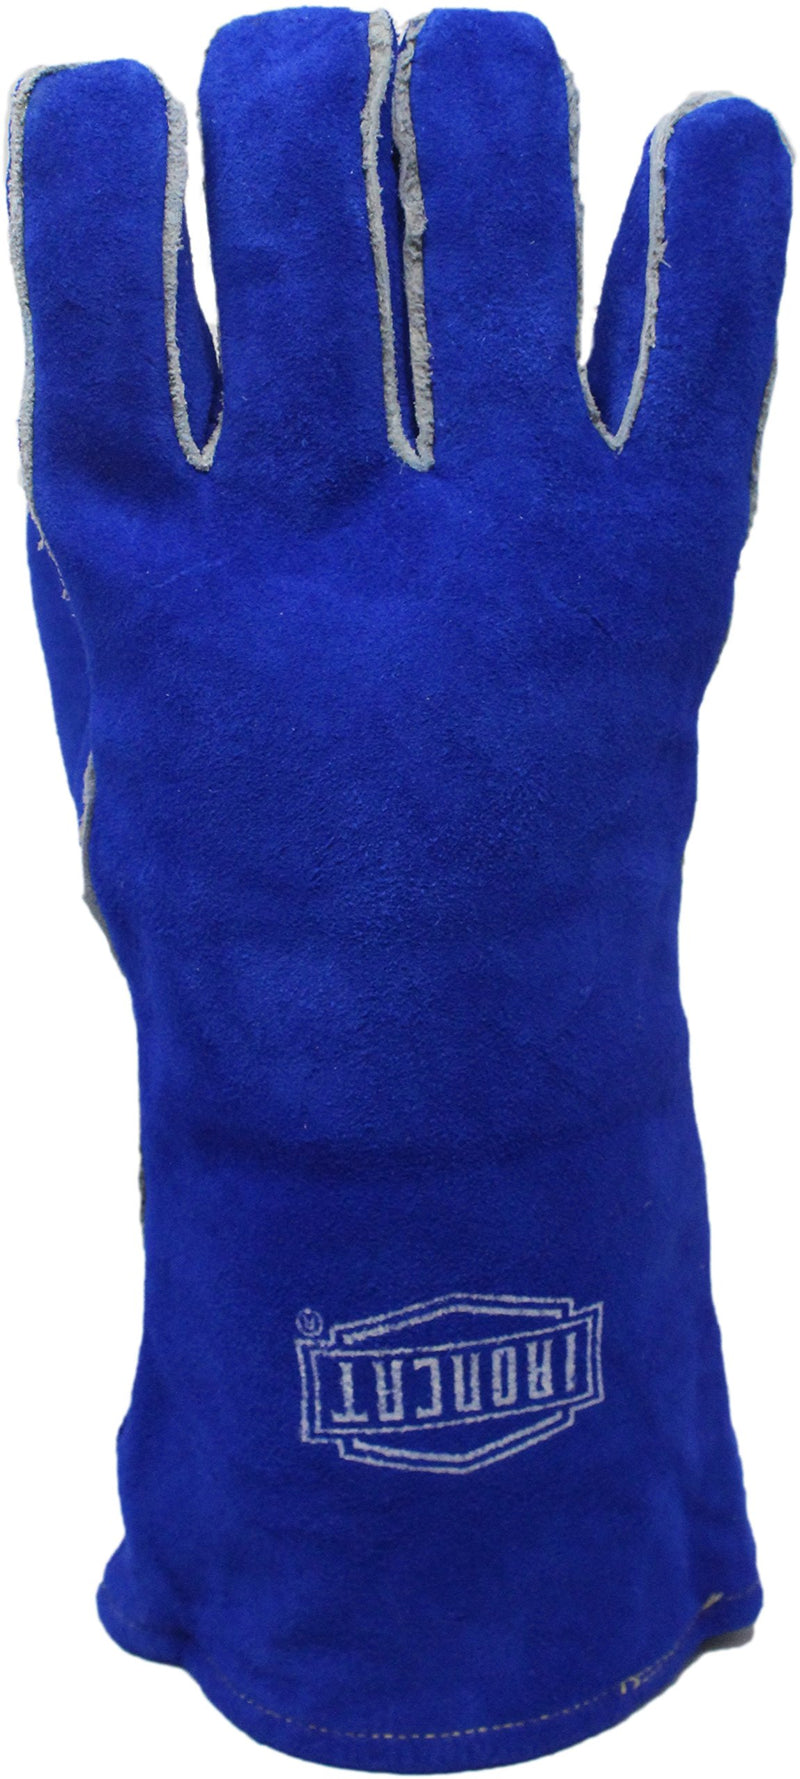  [AUSTRALIA] - West Chester IRONCAT 9041 Select Split Cowhide Leather Stick Welding Gloves: Large, 1 Pair